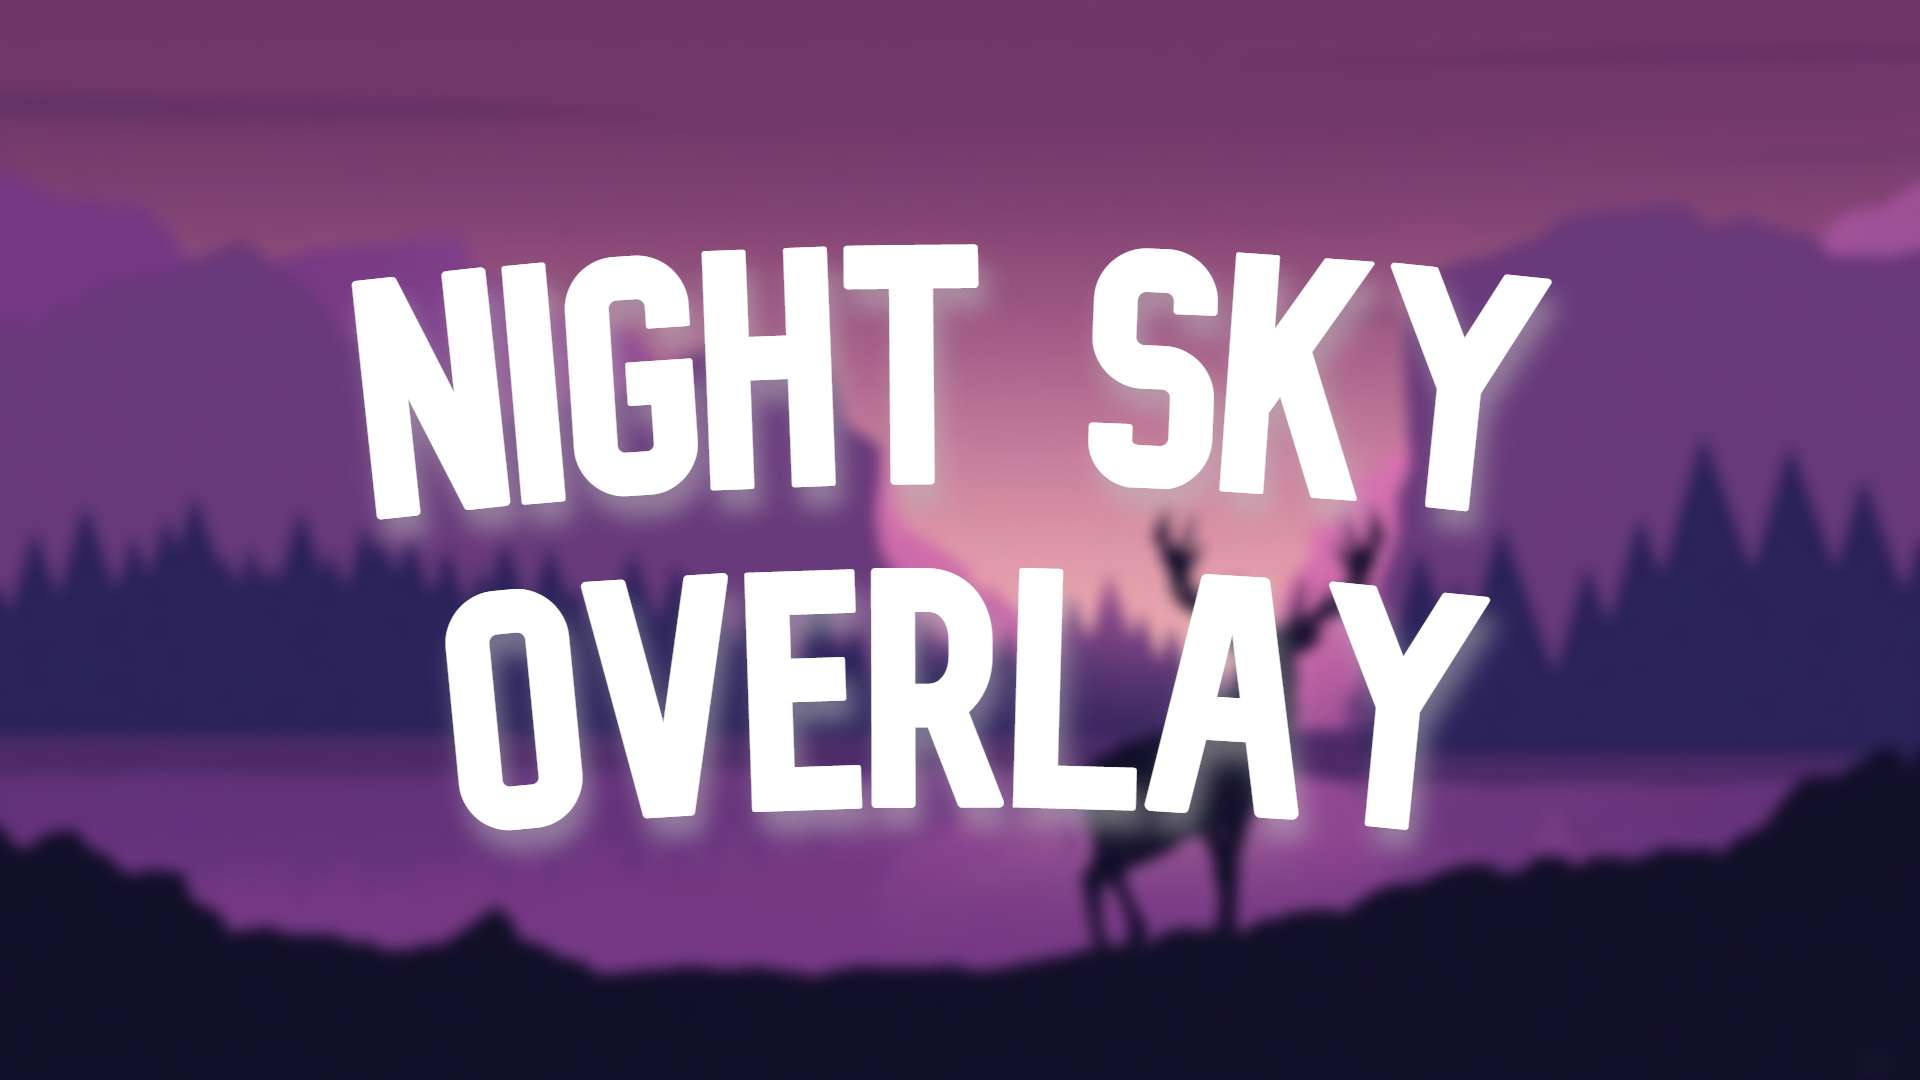 Night Sky Overlay #14 16 by rh56 on PvPRP